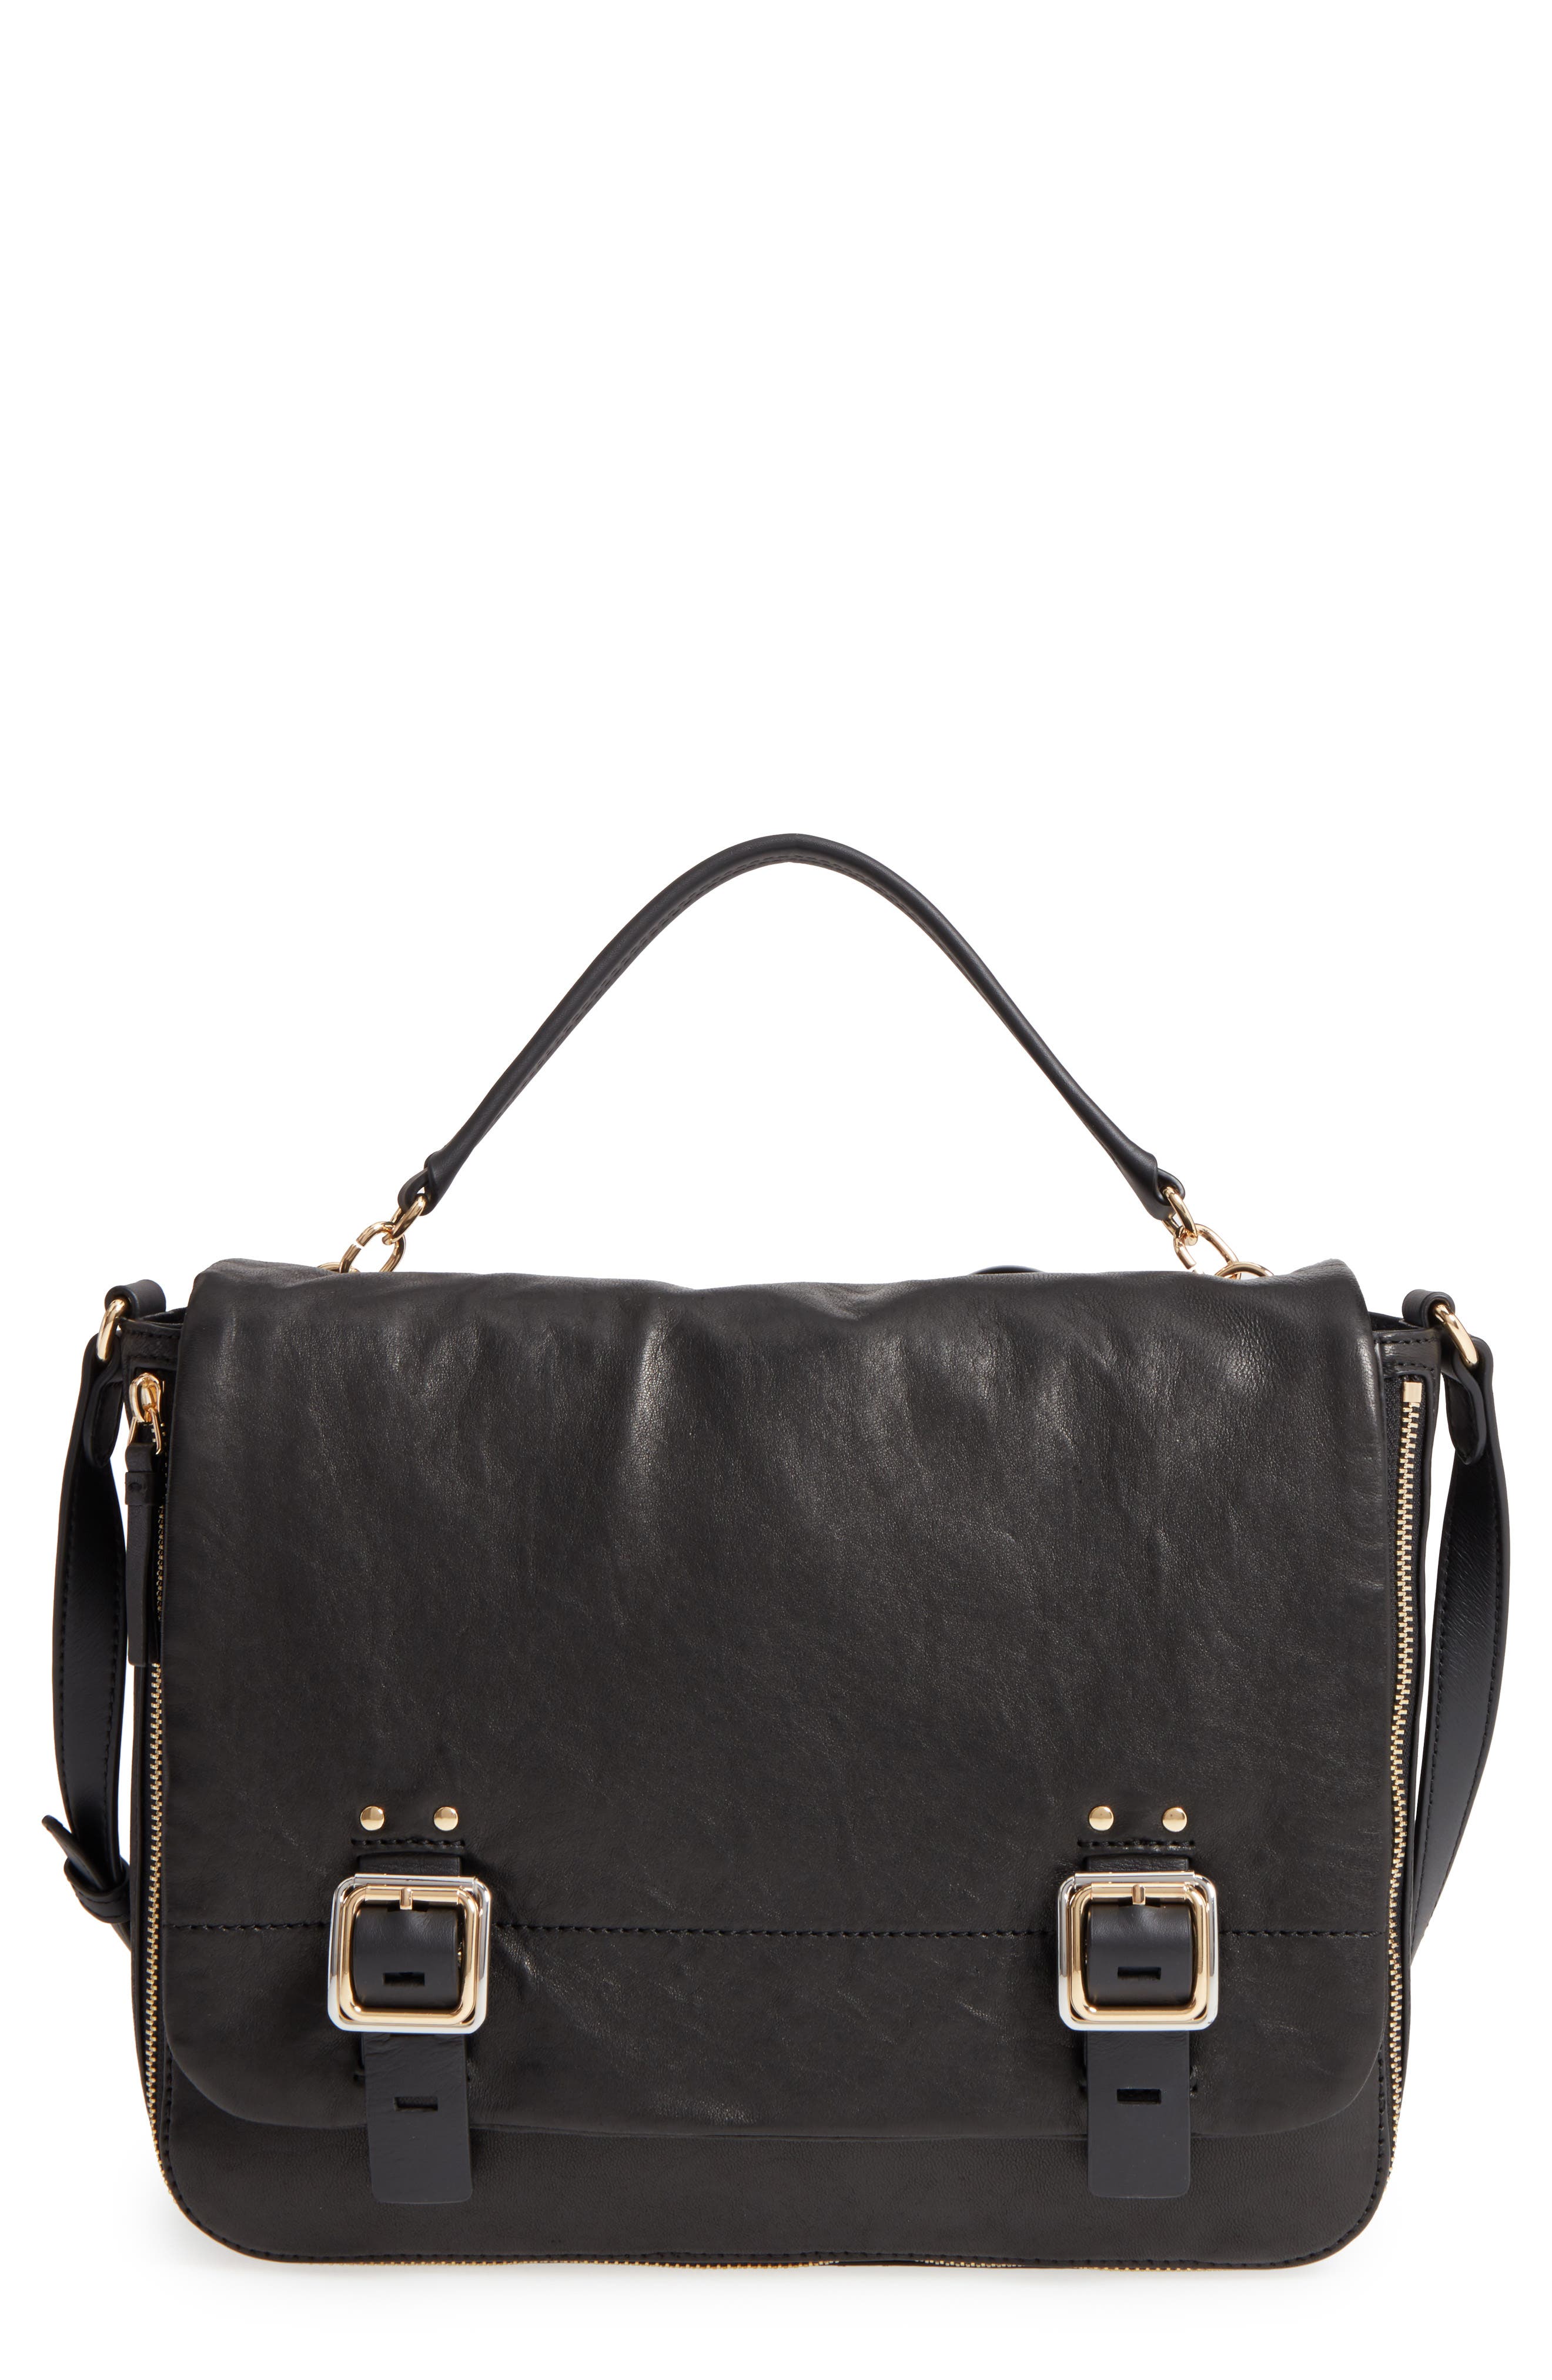 Black Satchel Handbag - Mc Luggage